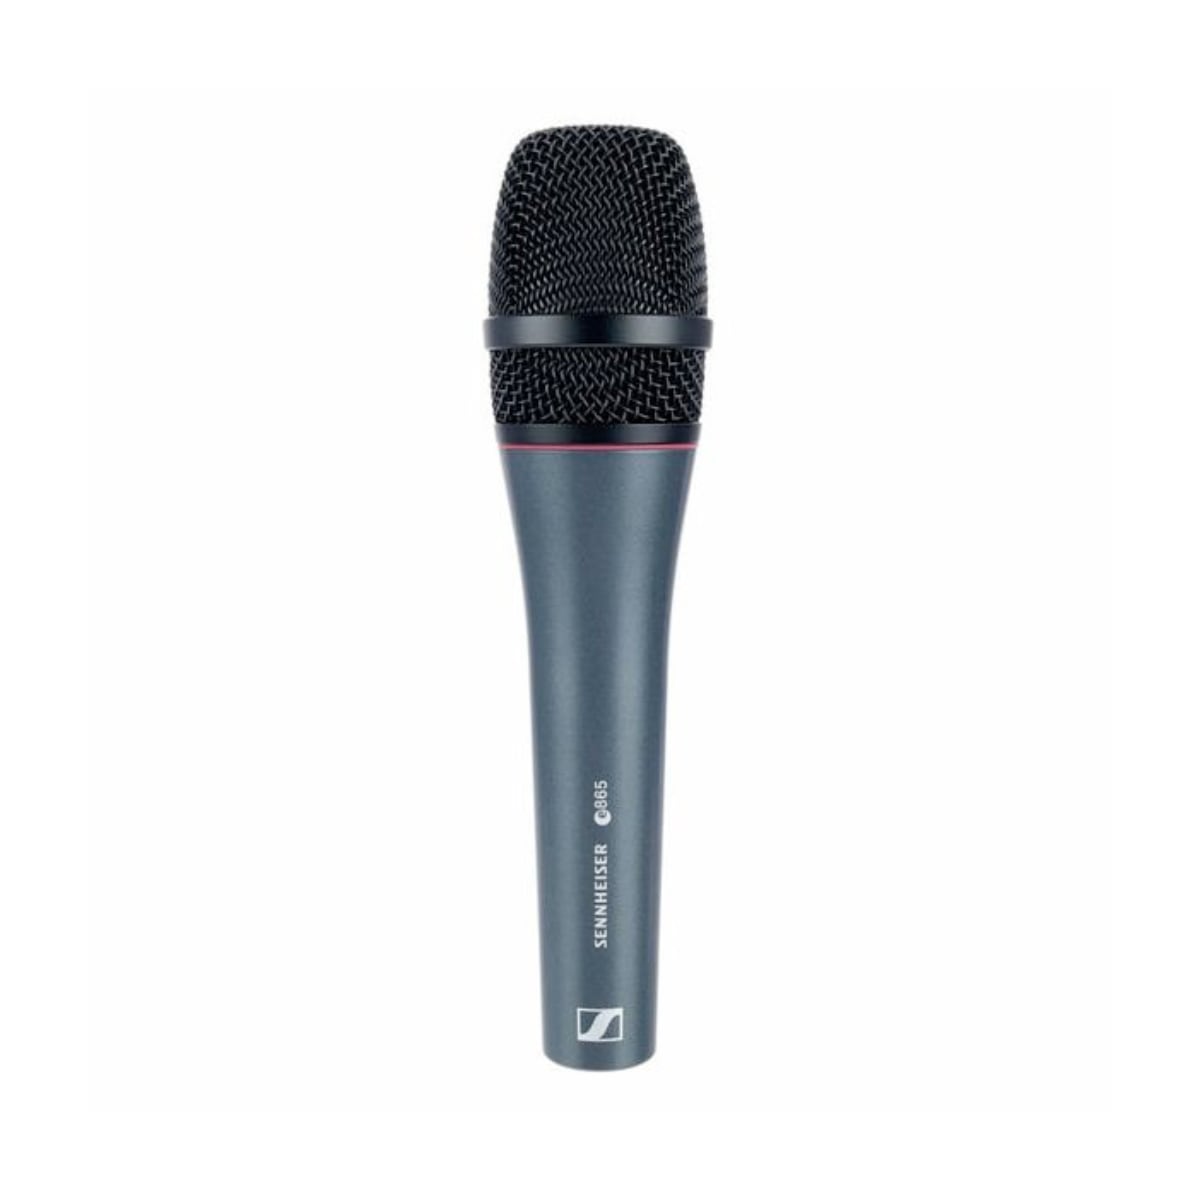 Sennheiser e 865 Condenser Vocal Microphone